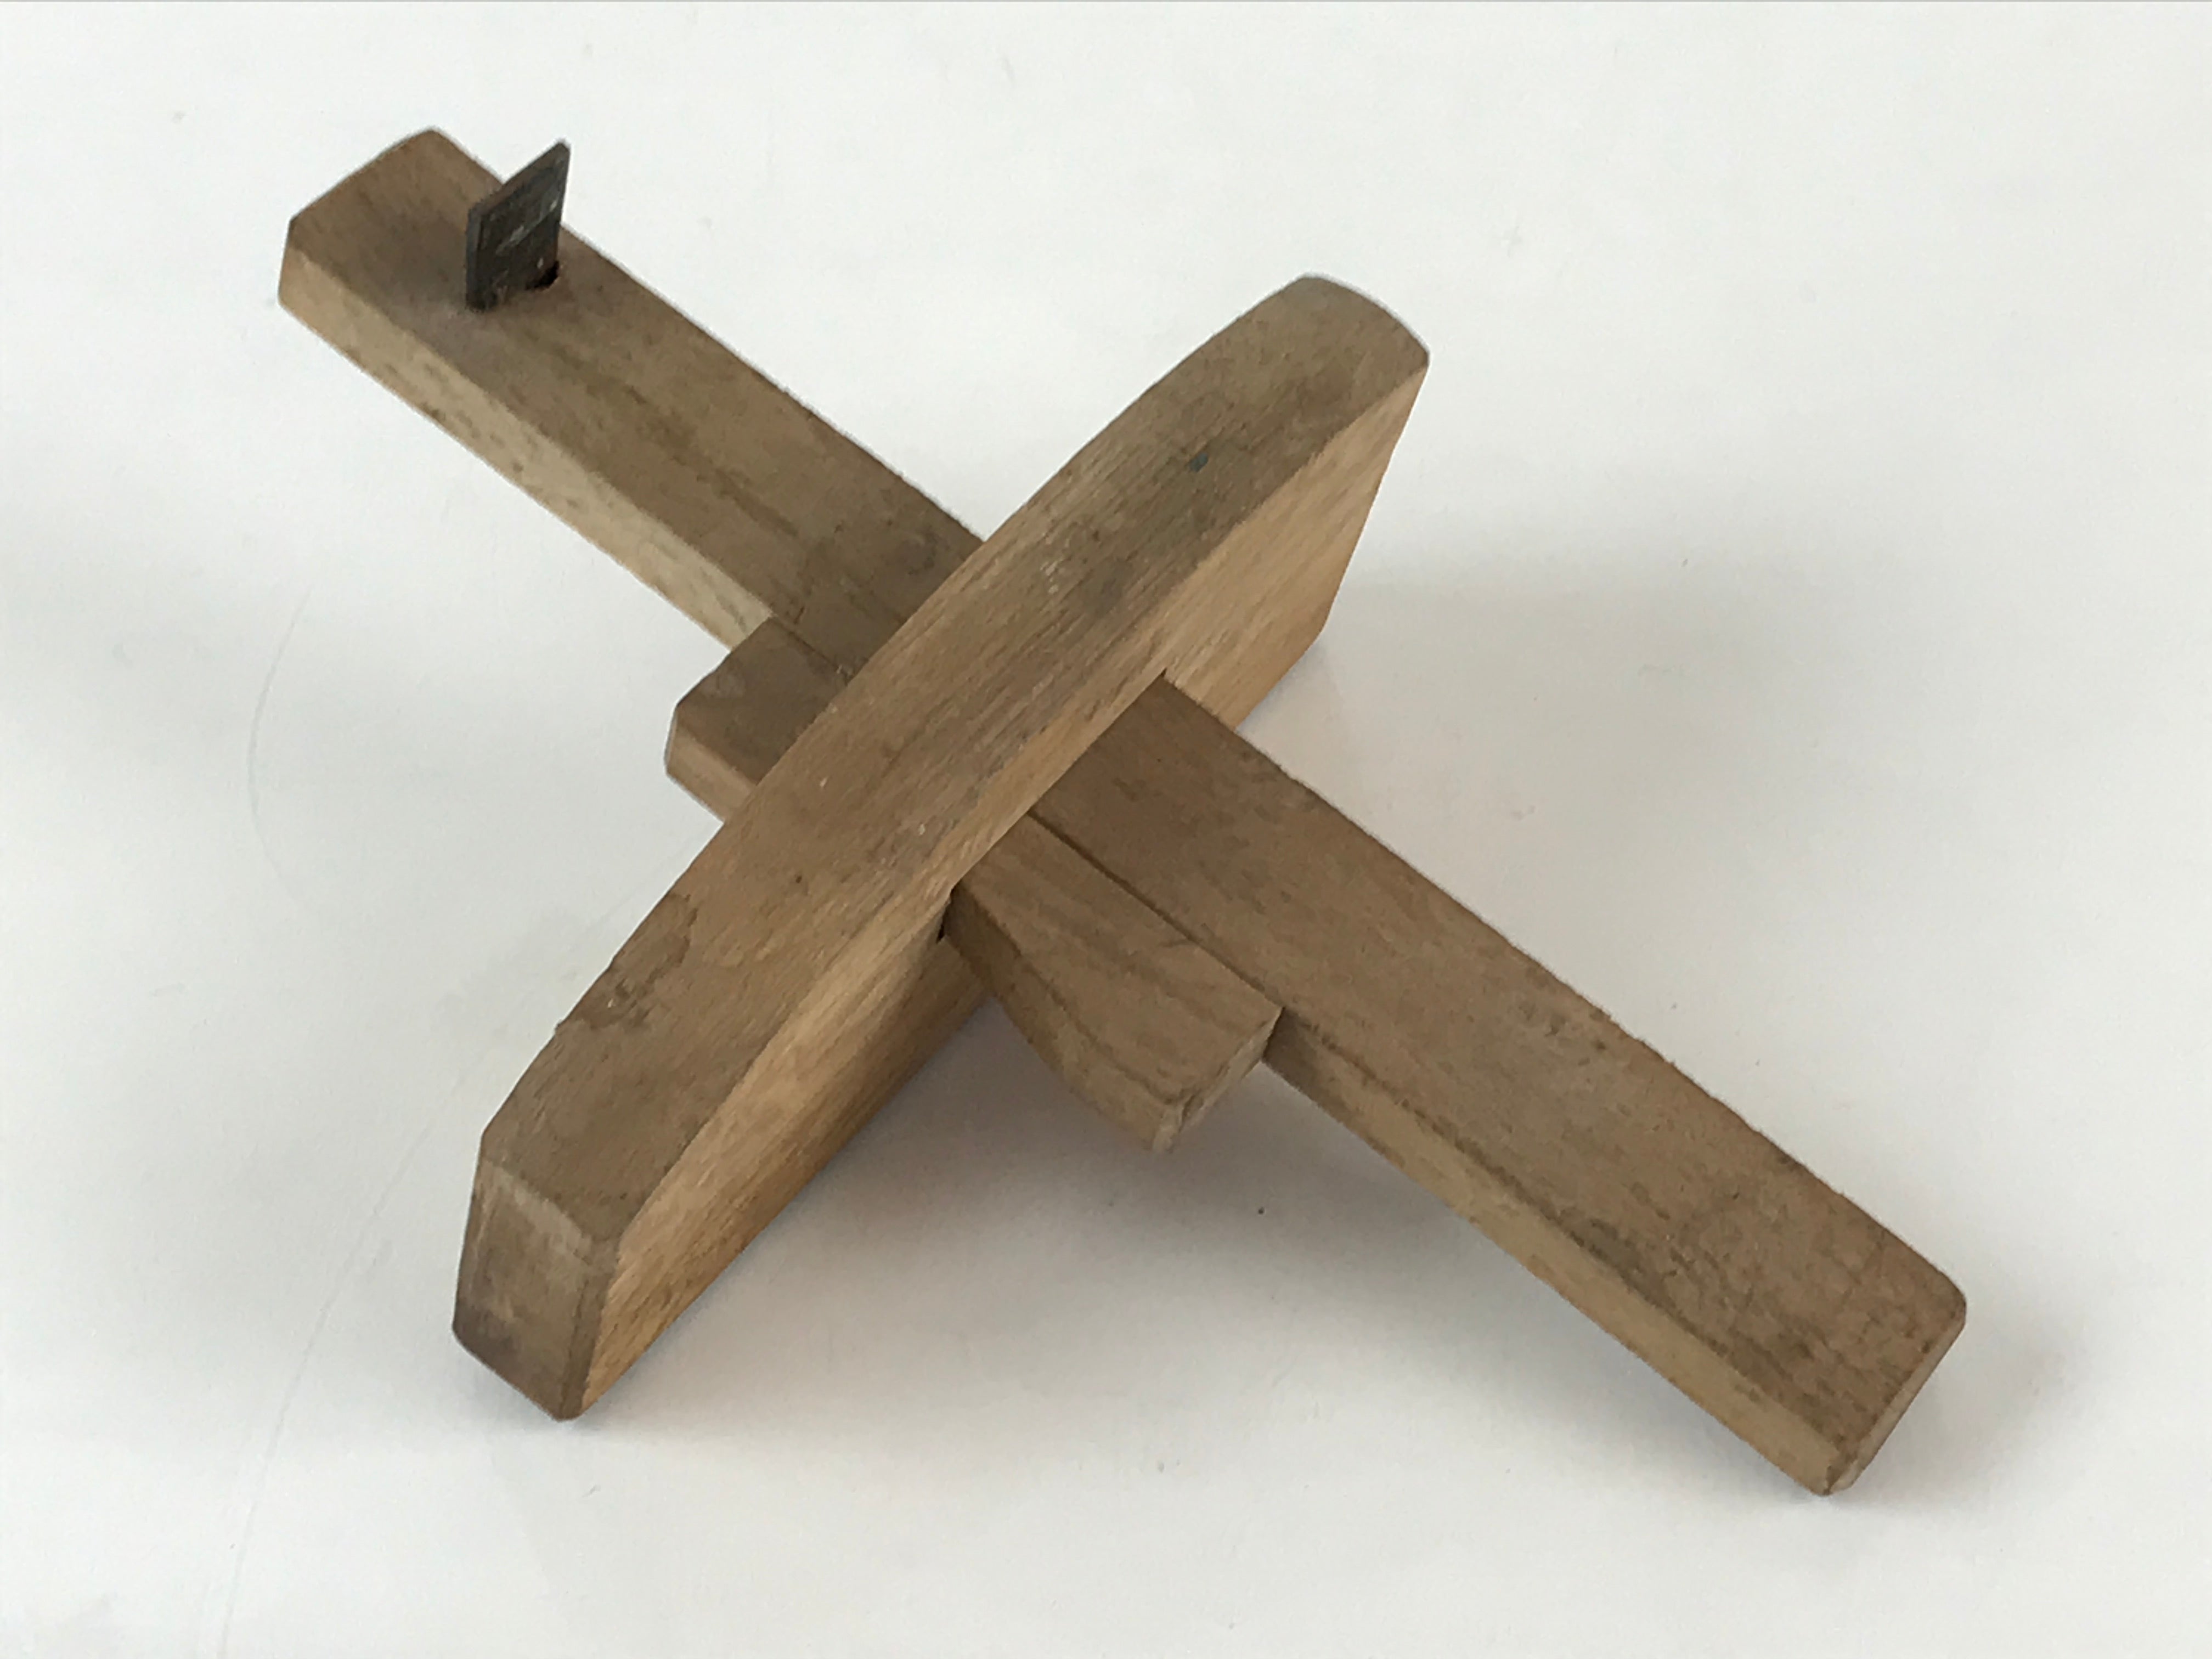 Japanese Woodworking Marking Guide Gauge Vtg Suji-Kebiki Carpentry Tool K447